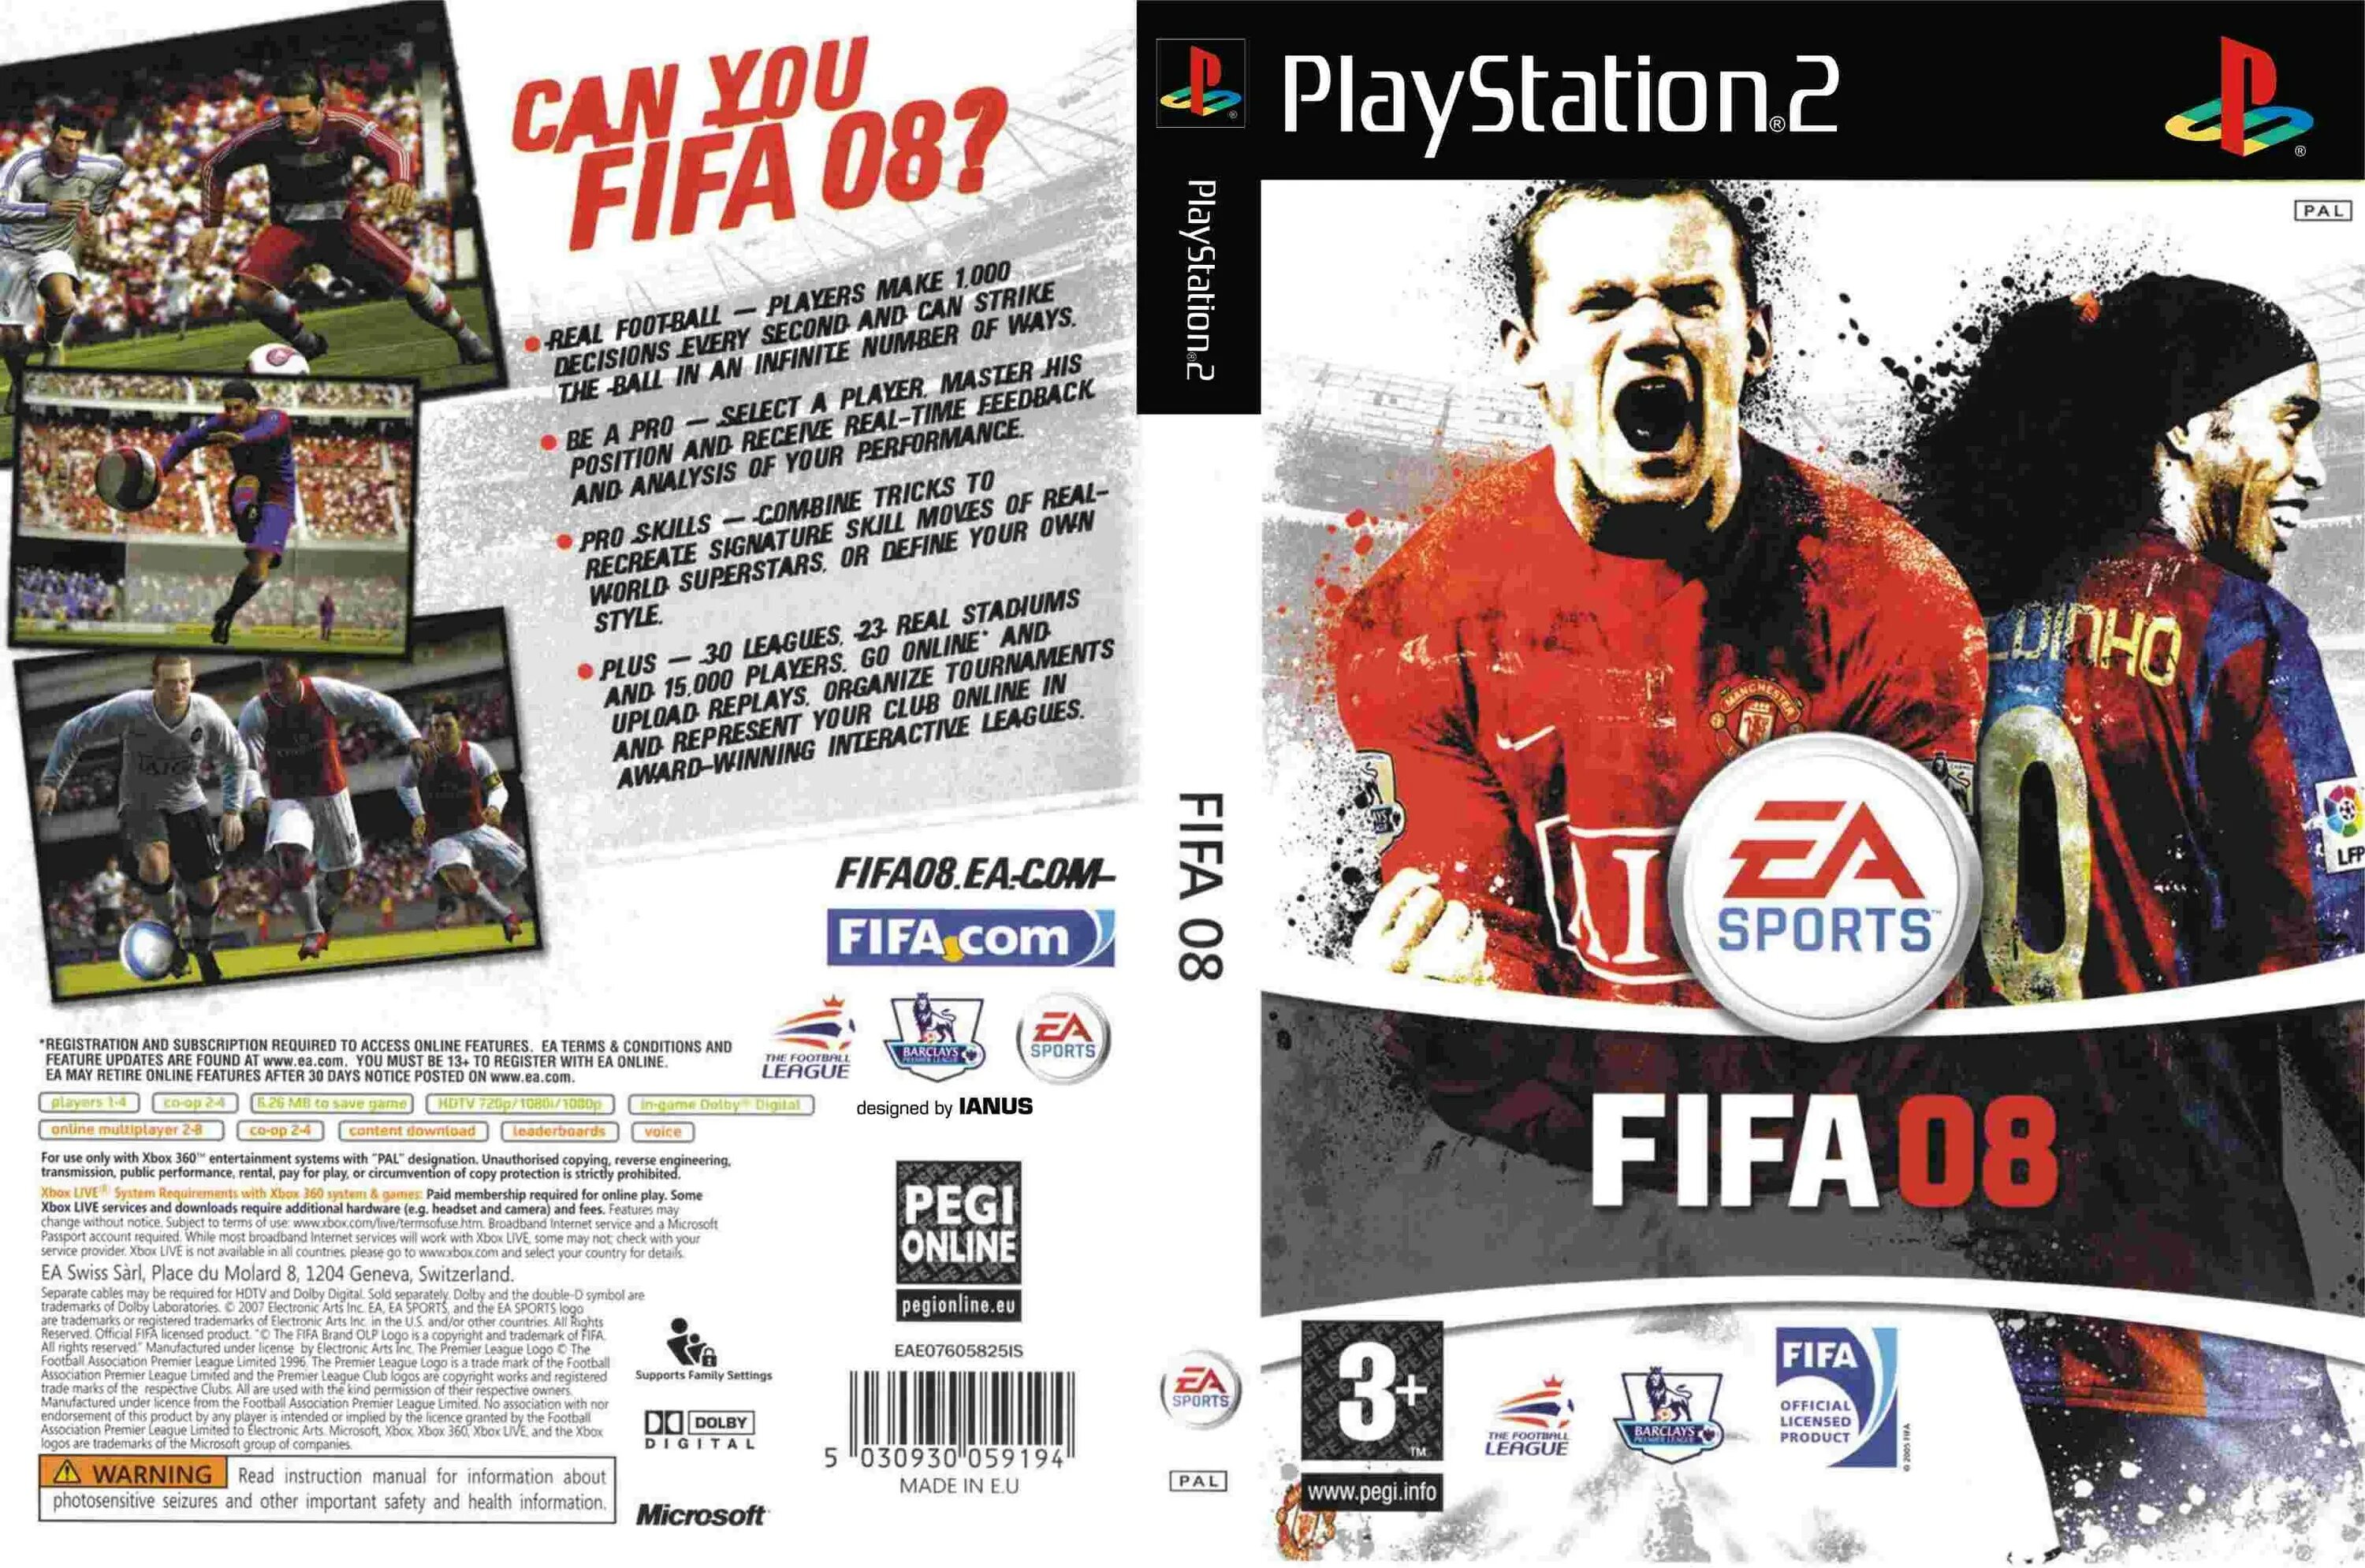 Фифа пс 2. FIFA 08 ps2. FIFA 08 диски PC. Диск FIFA 8 PLAYSTATION 2. FIFA 08 ps2 Cover.